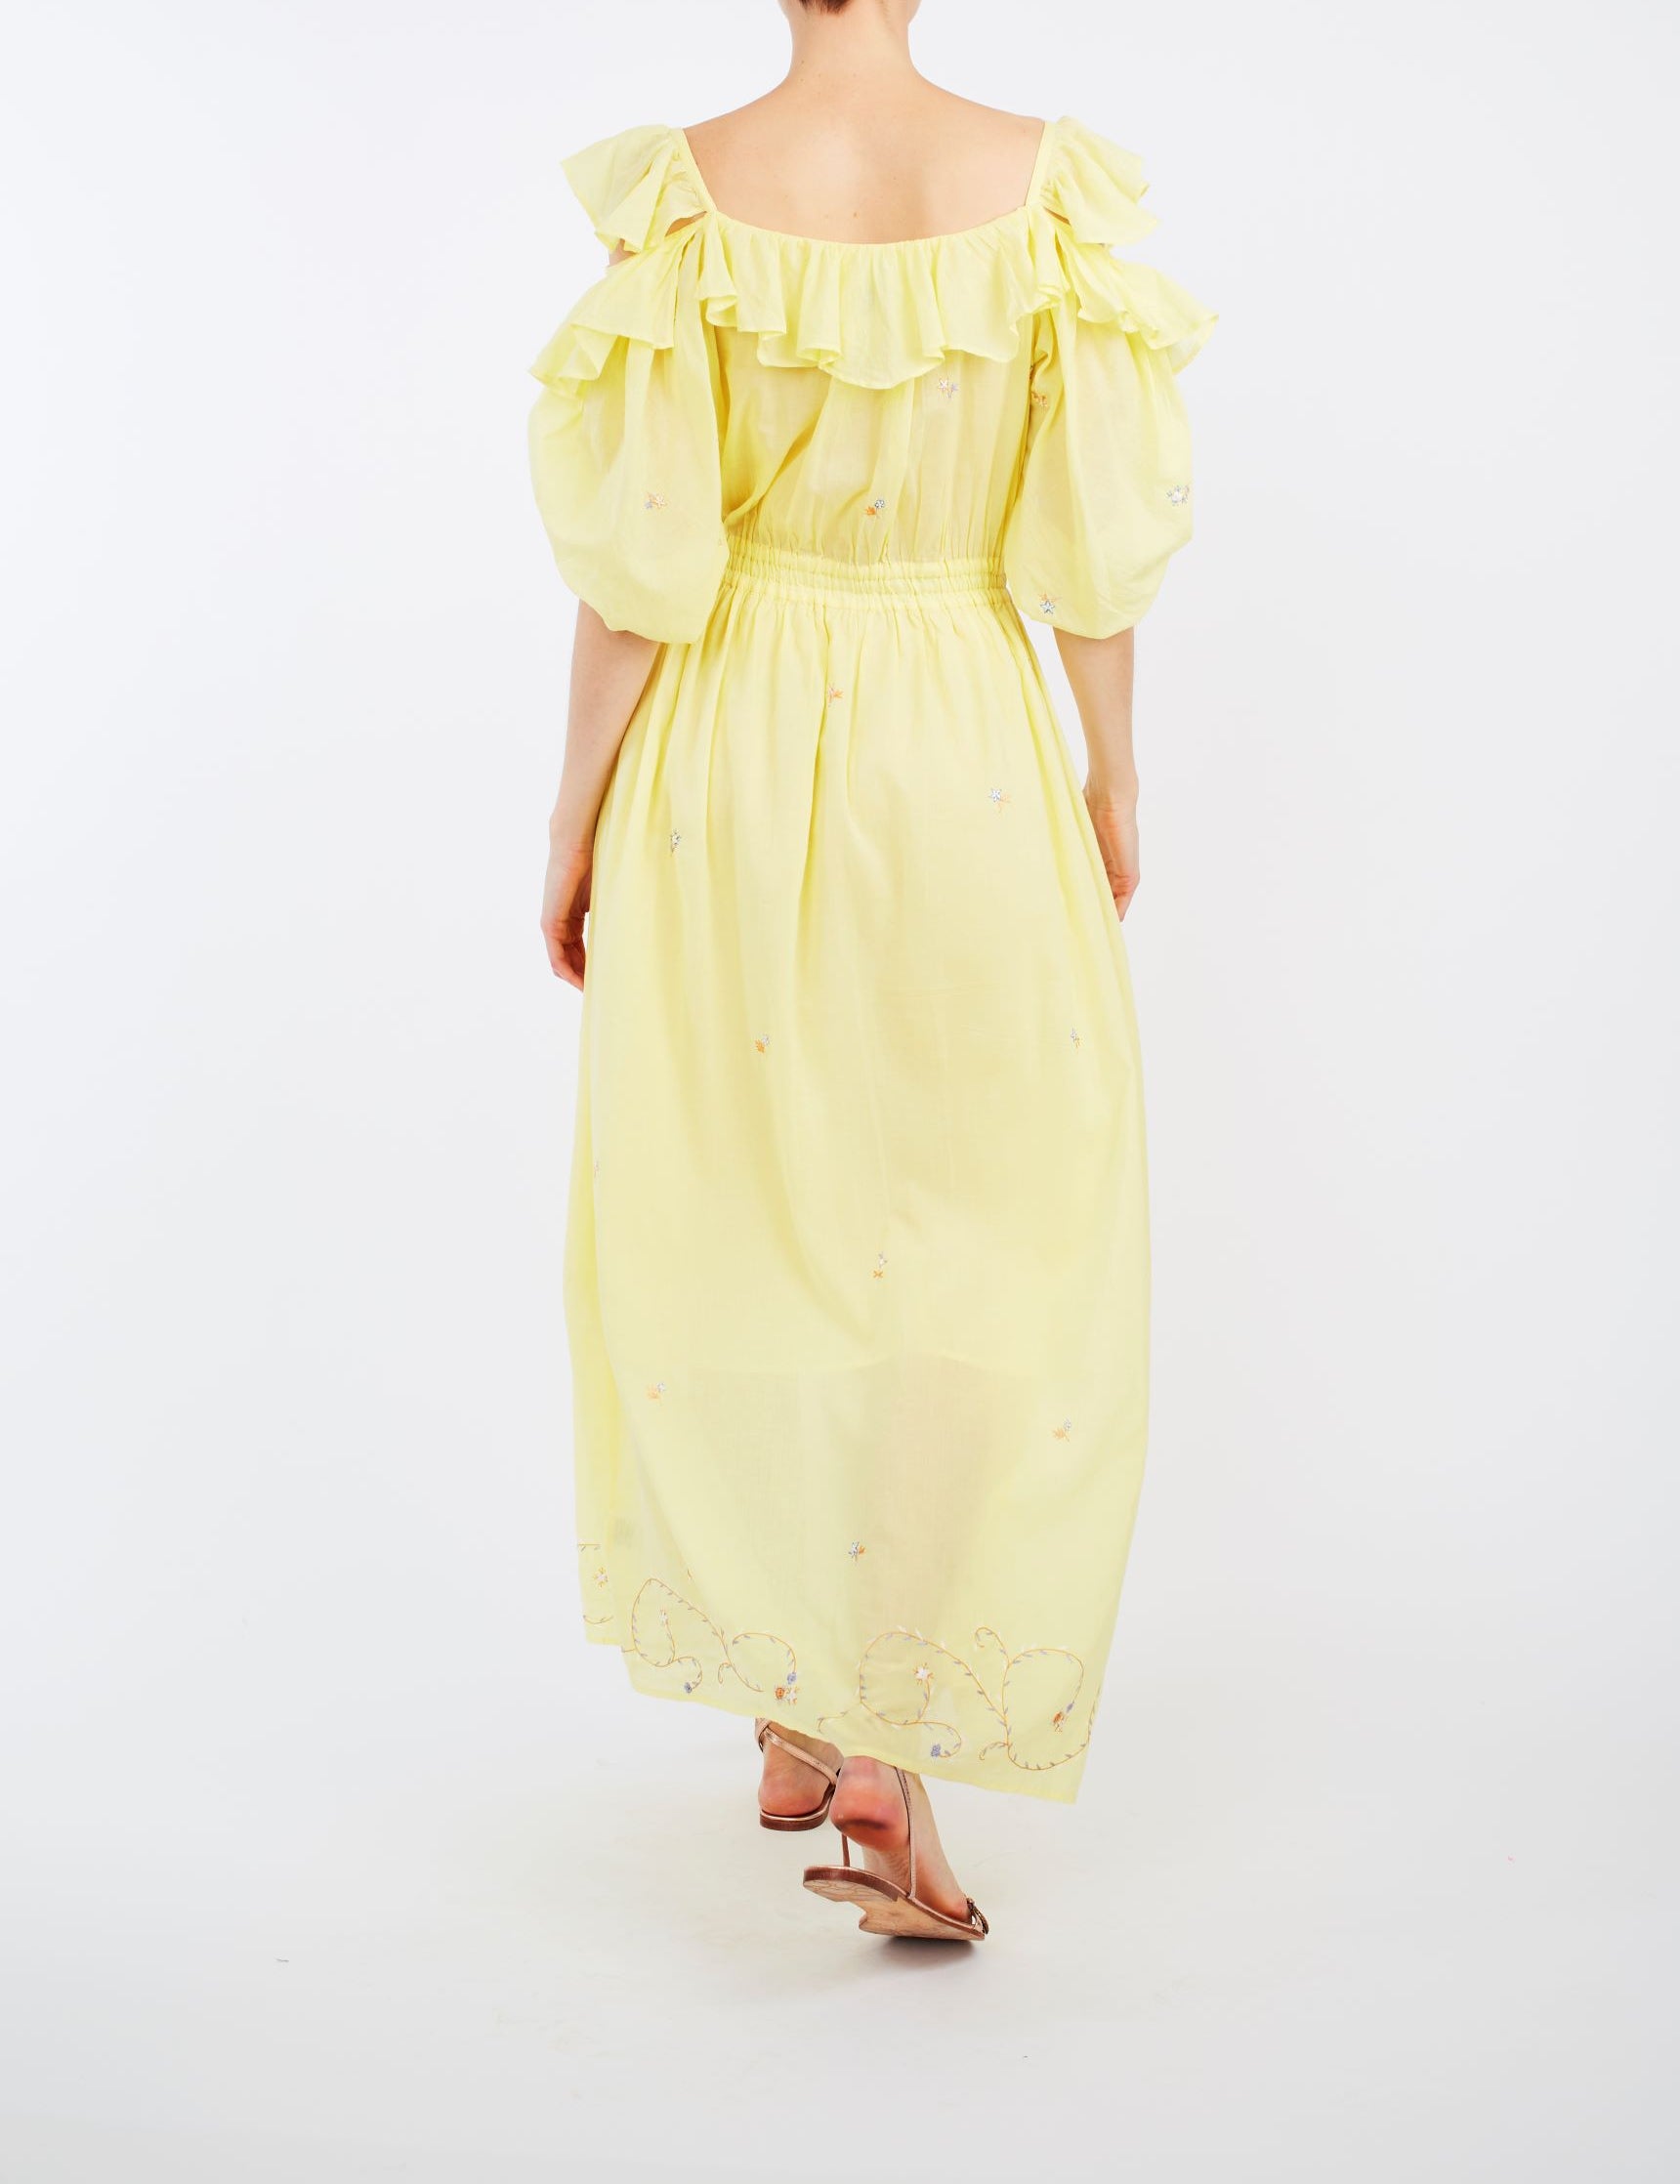 Back view of Venus Boudoir Sweet Lemon Dress by Thierry Colson